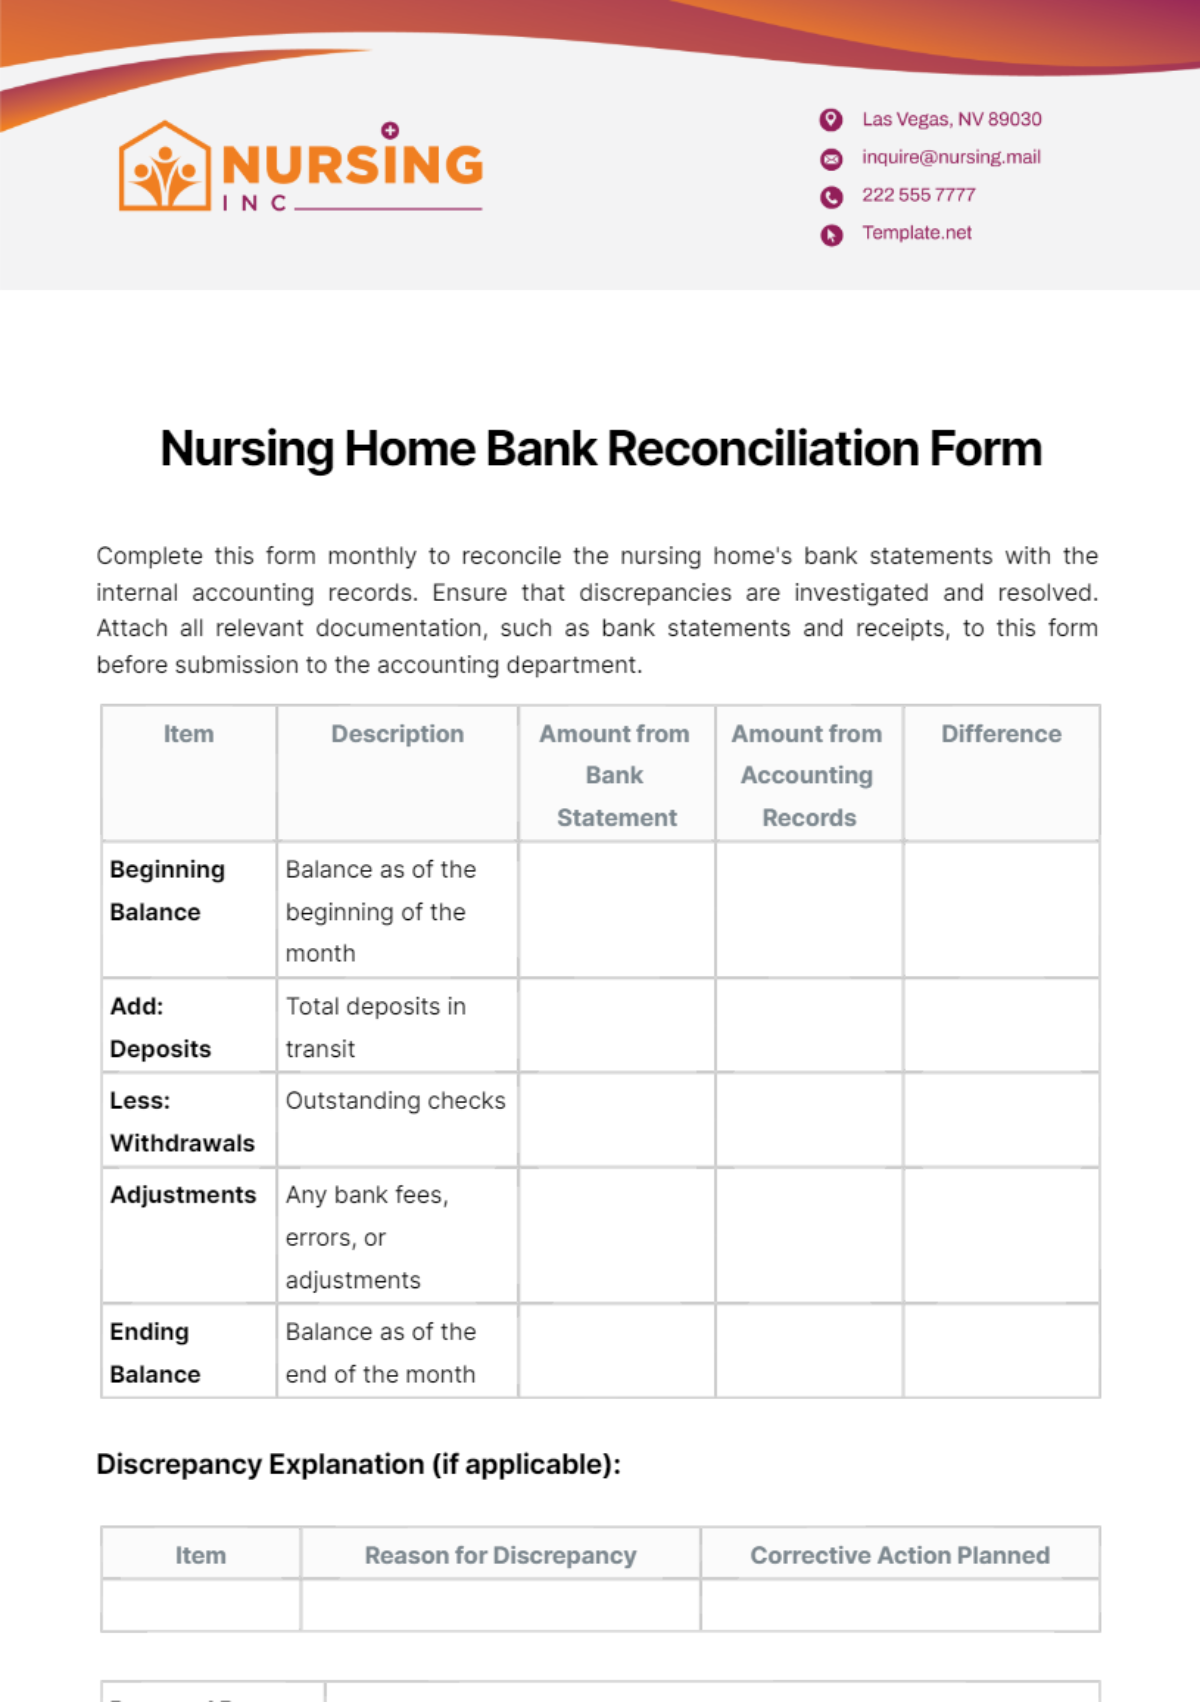 Nursing Home Bank Reconciliation Form Template